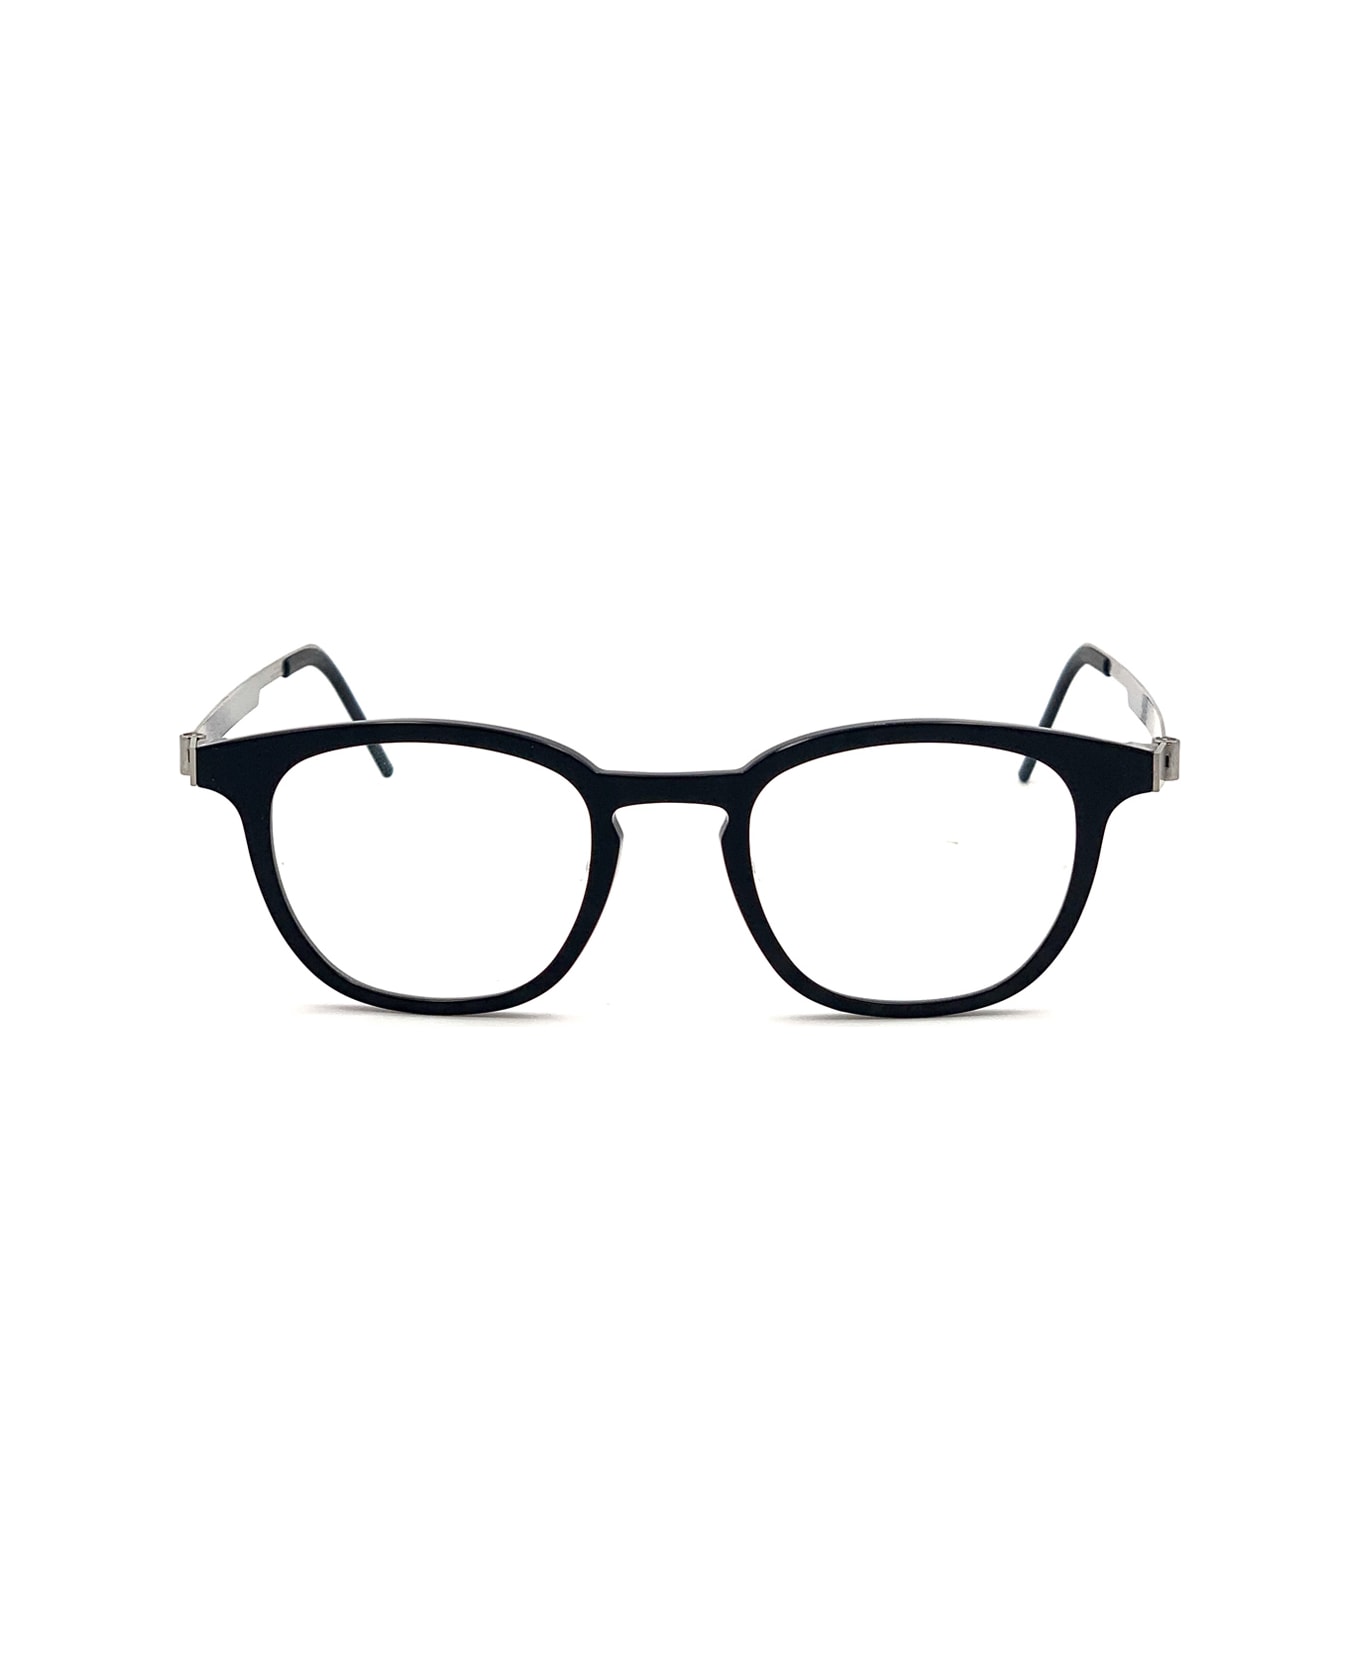 LINDBERG Acetanium 1051 Glasses - Nero アイウェア